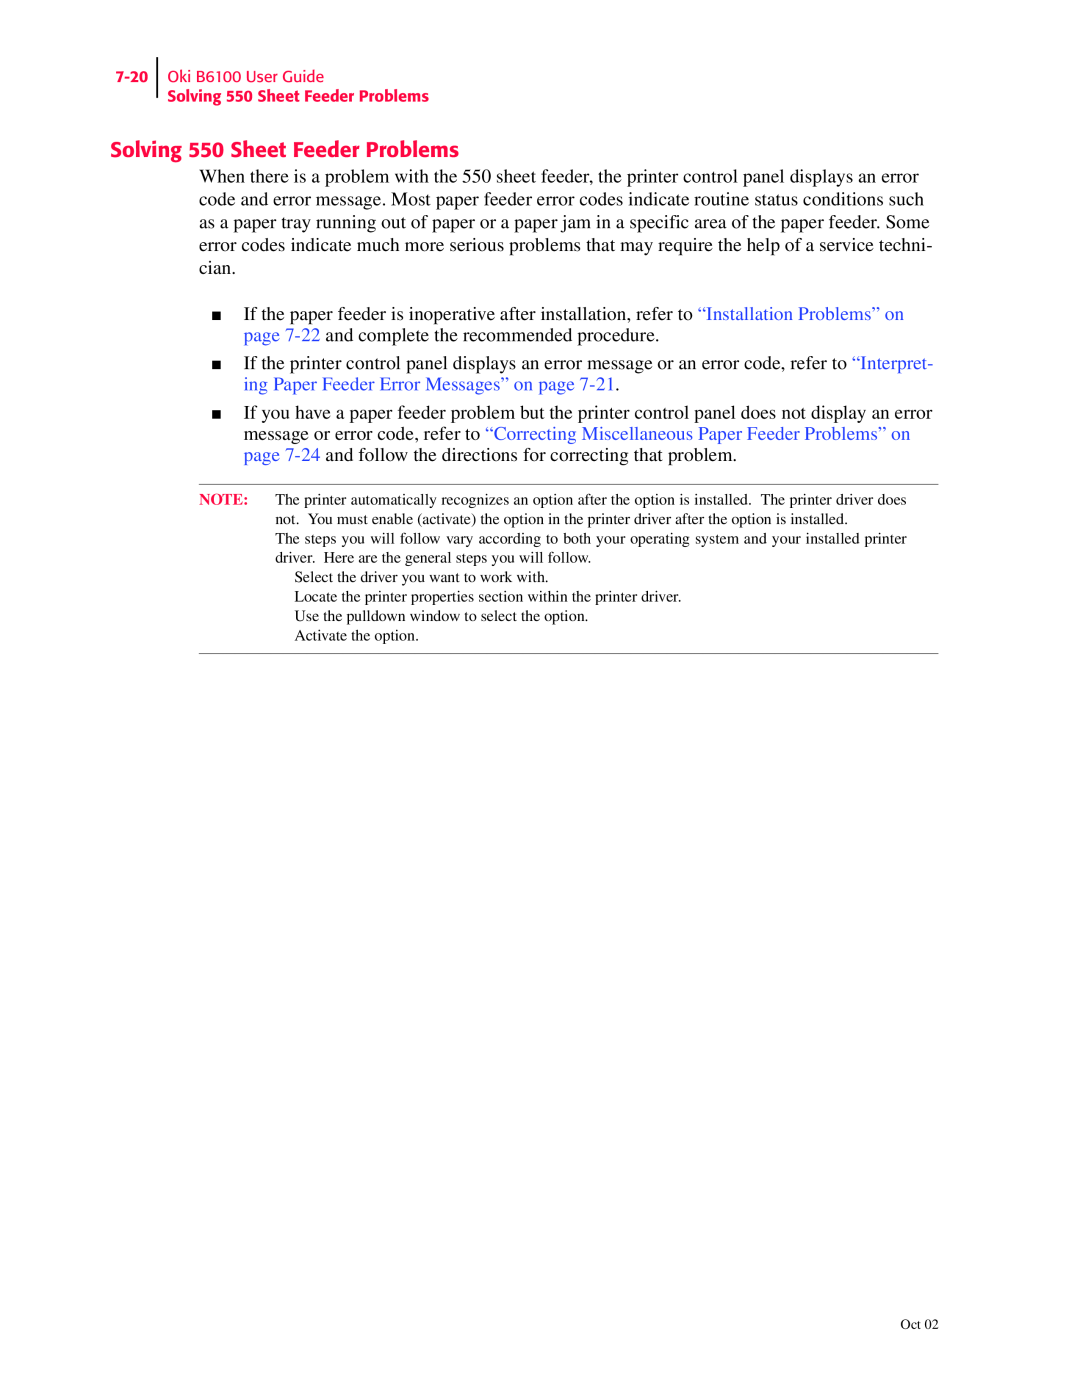 Oki manual Oki B6100 User Guide Solving 550 Sheet Feeder Problems 